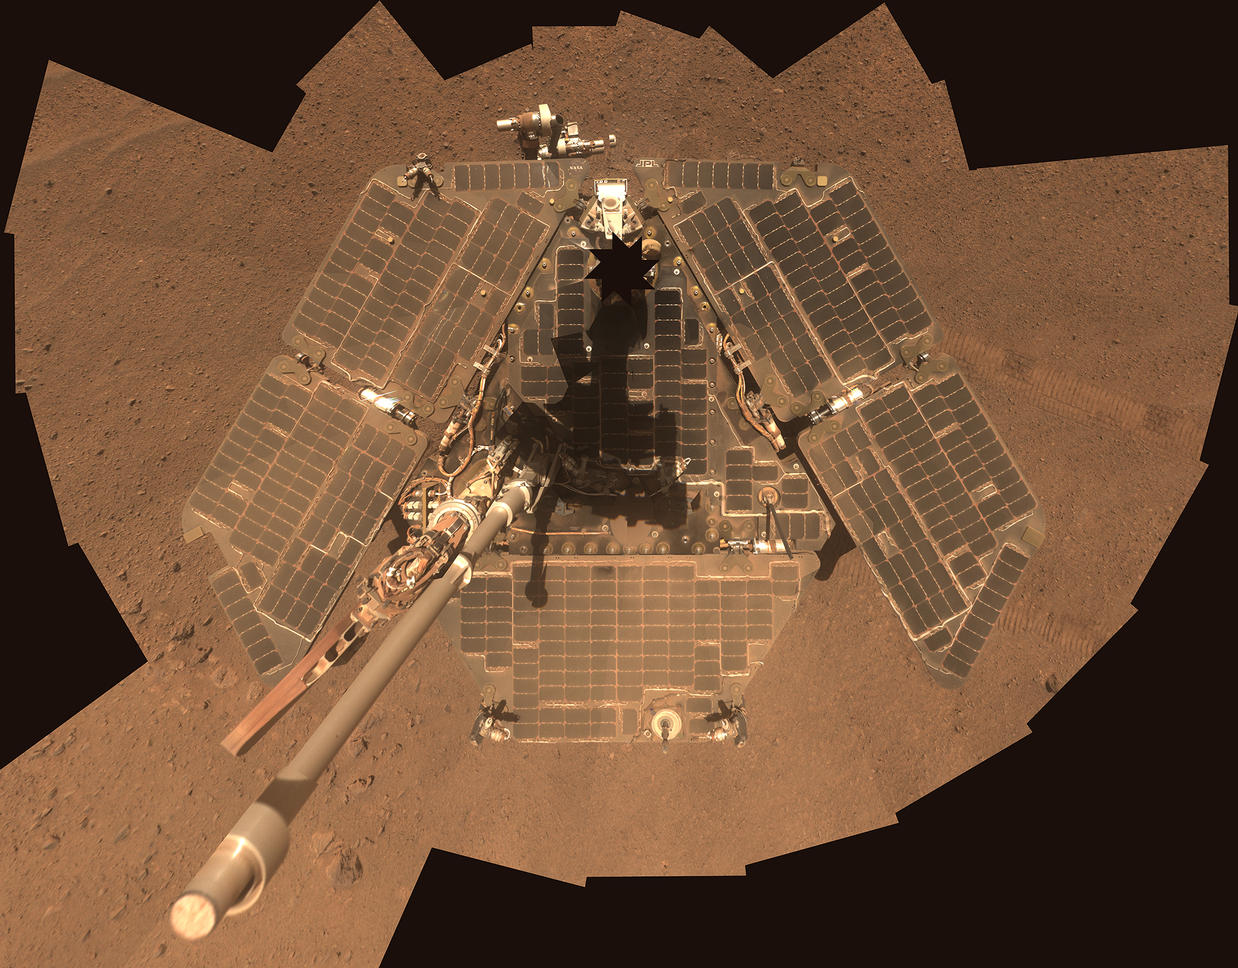 солнечные панели марсохода Opportunity